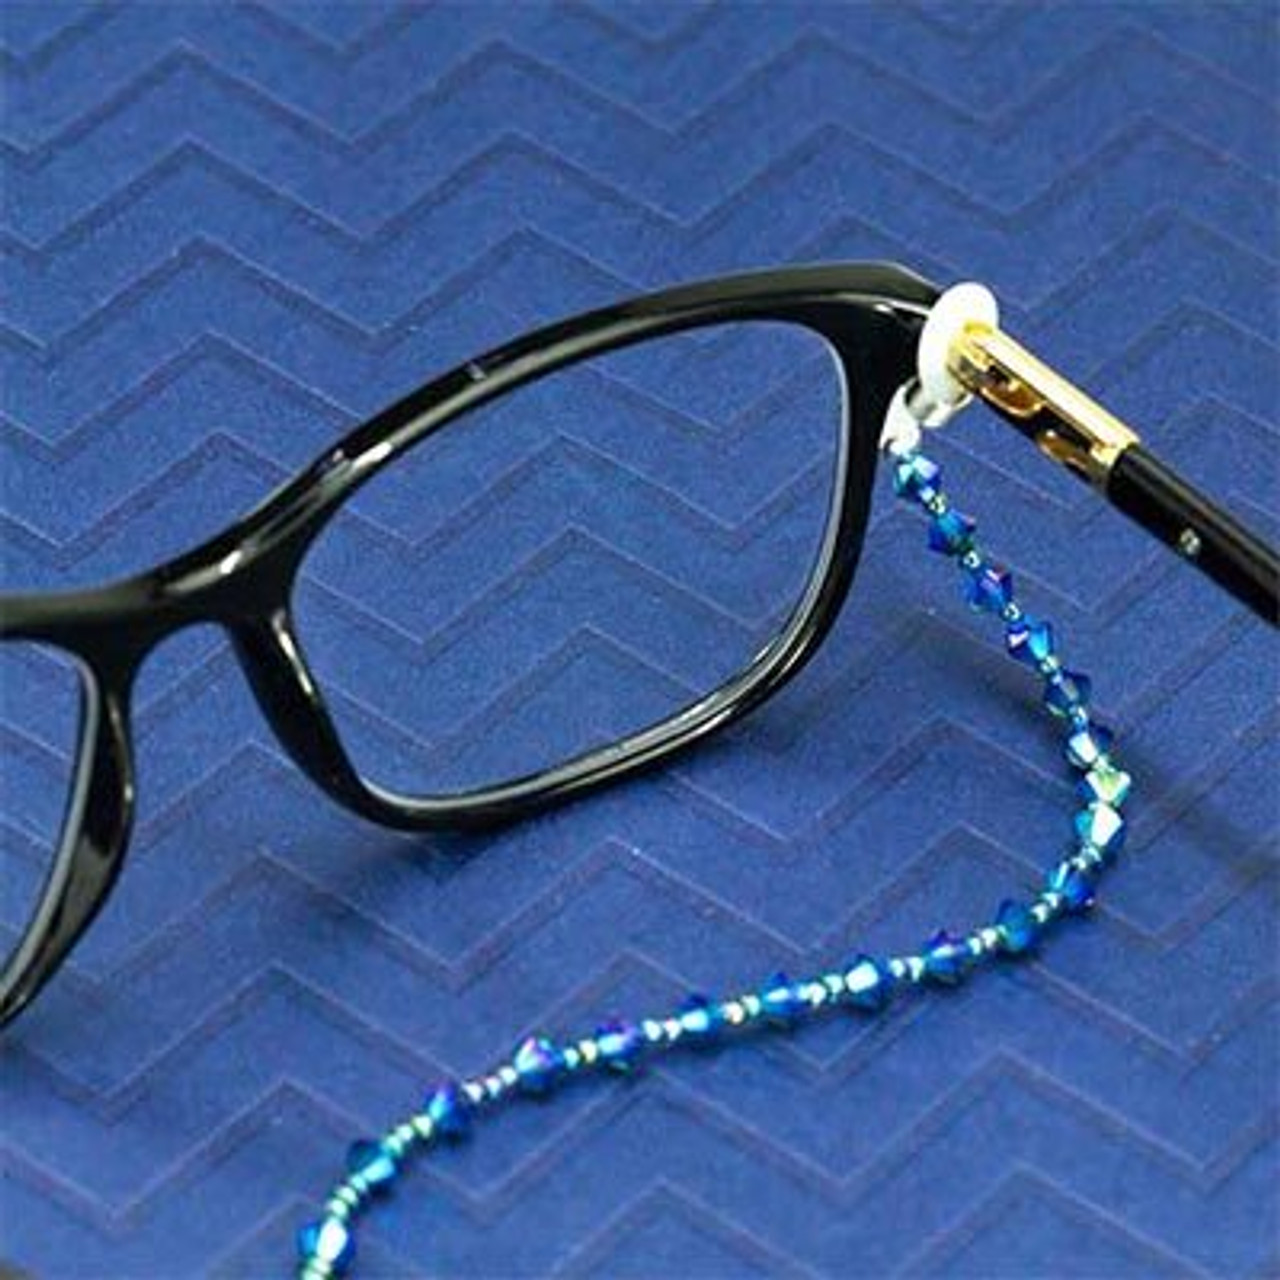 How to Make Eyeglass Holders 